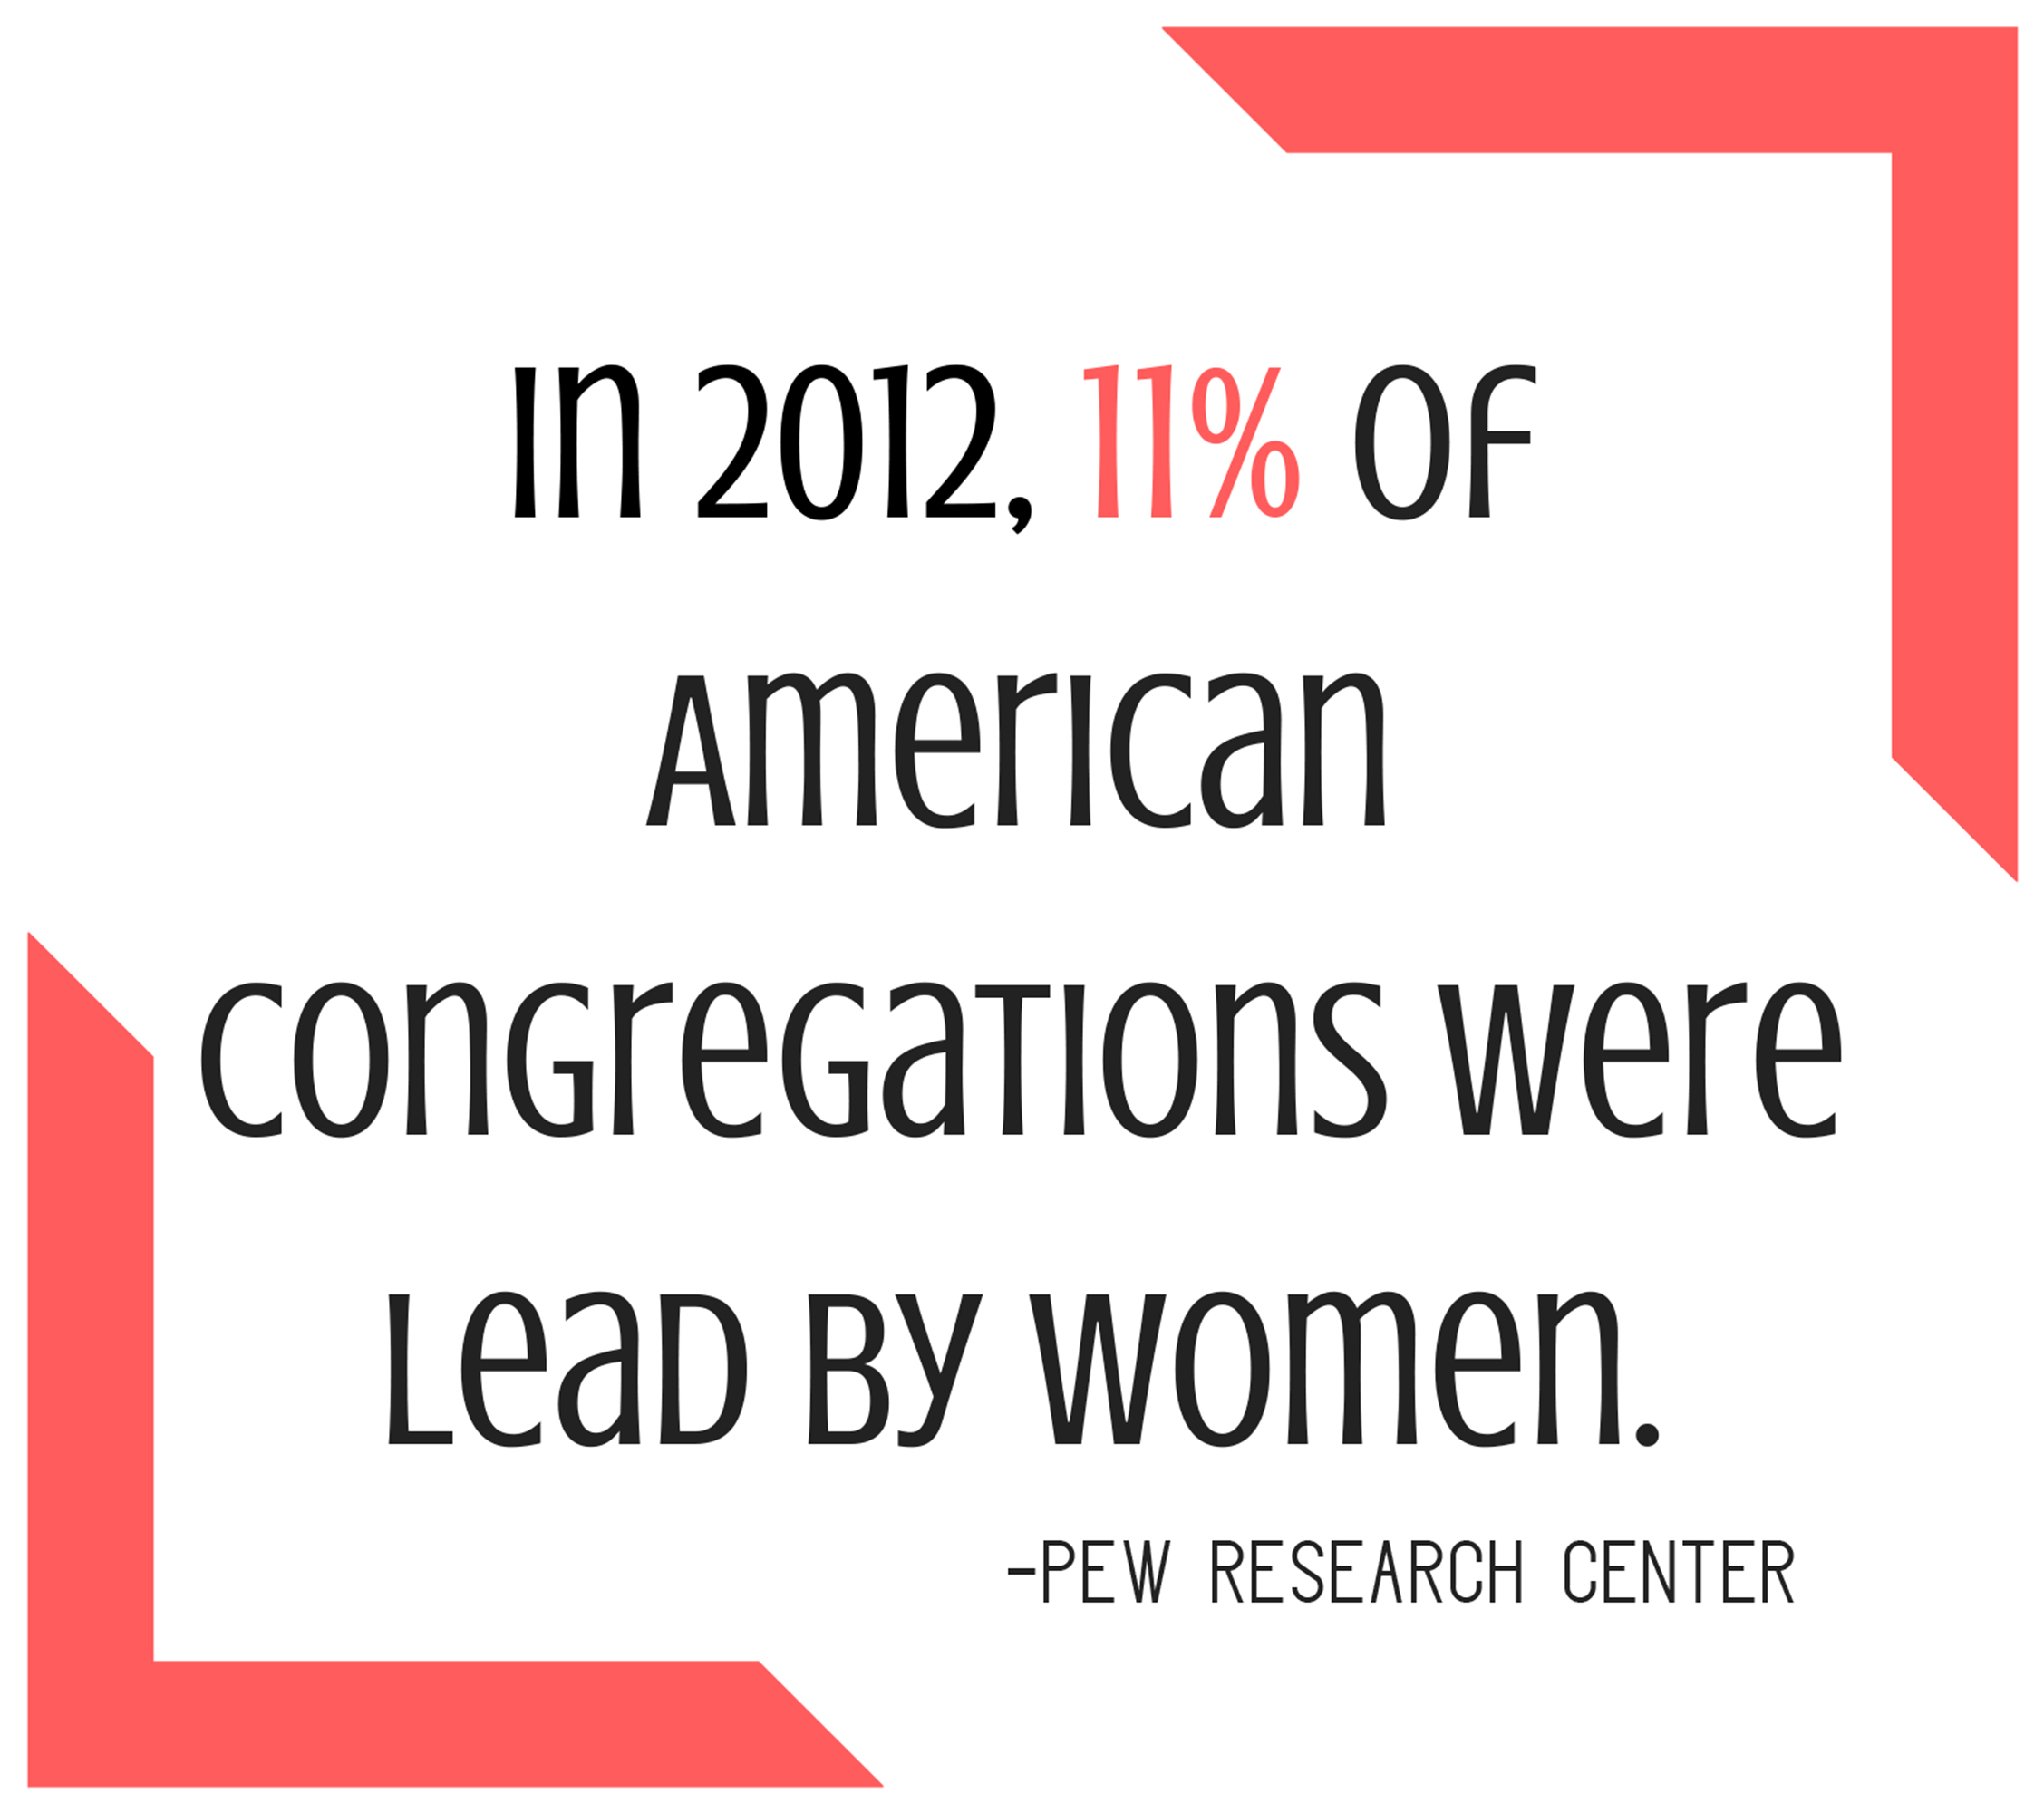 11% of American Congregations were lead by women in 2012